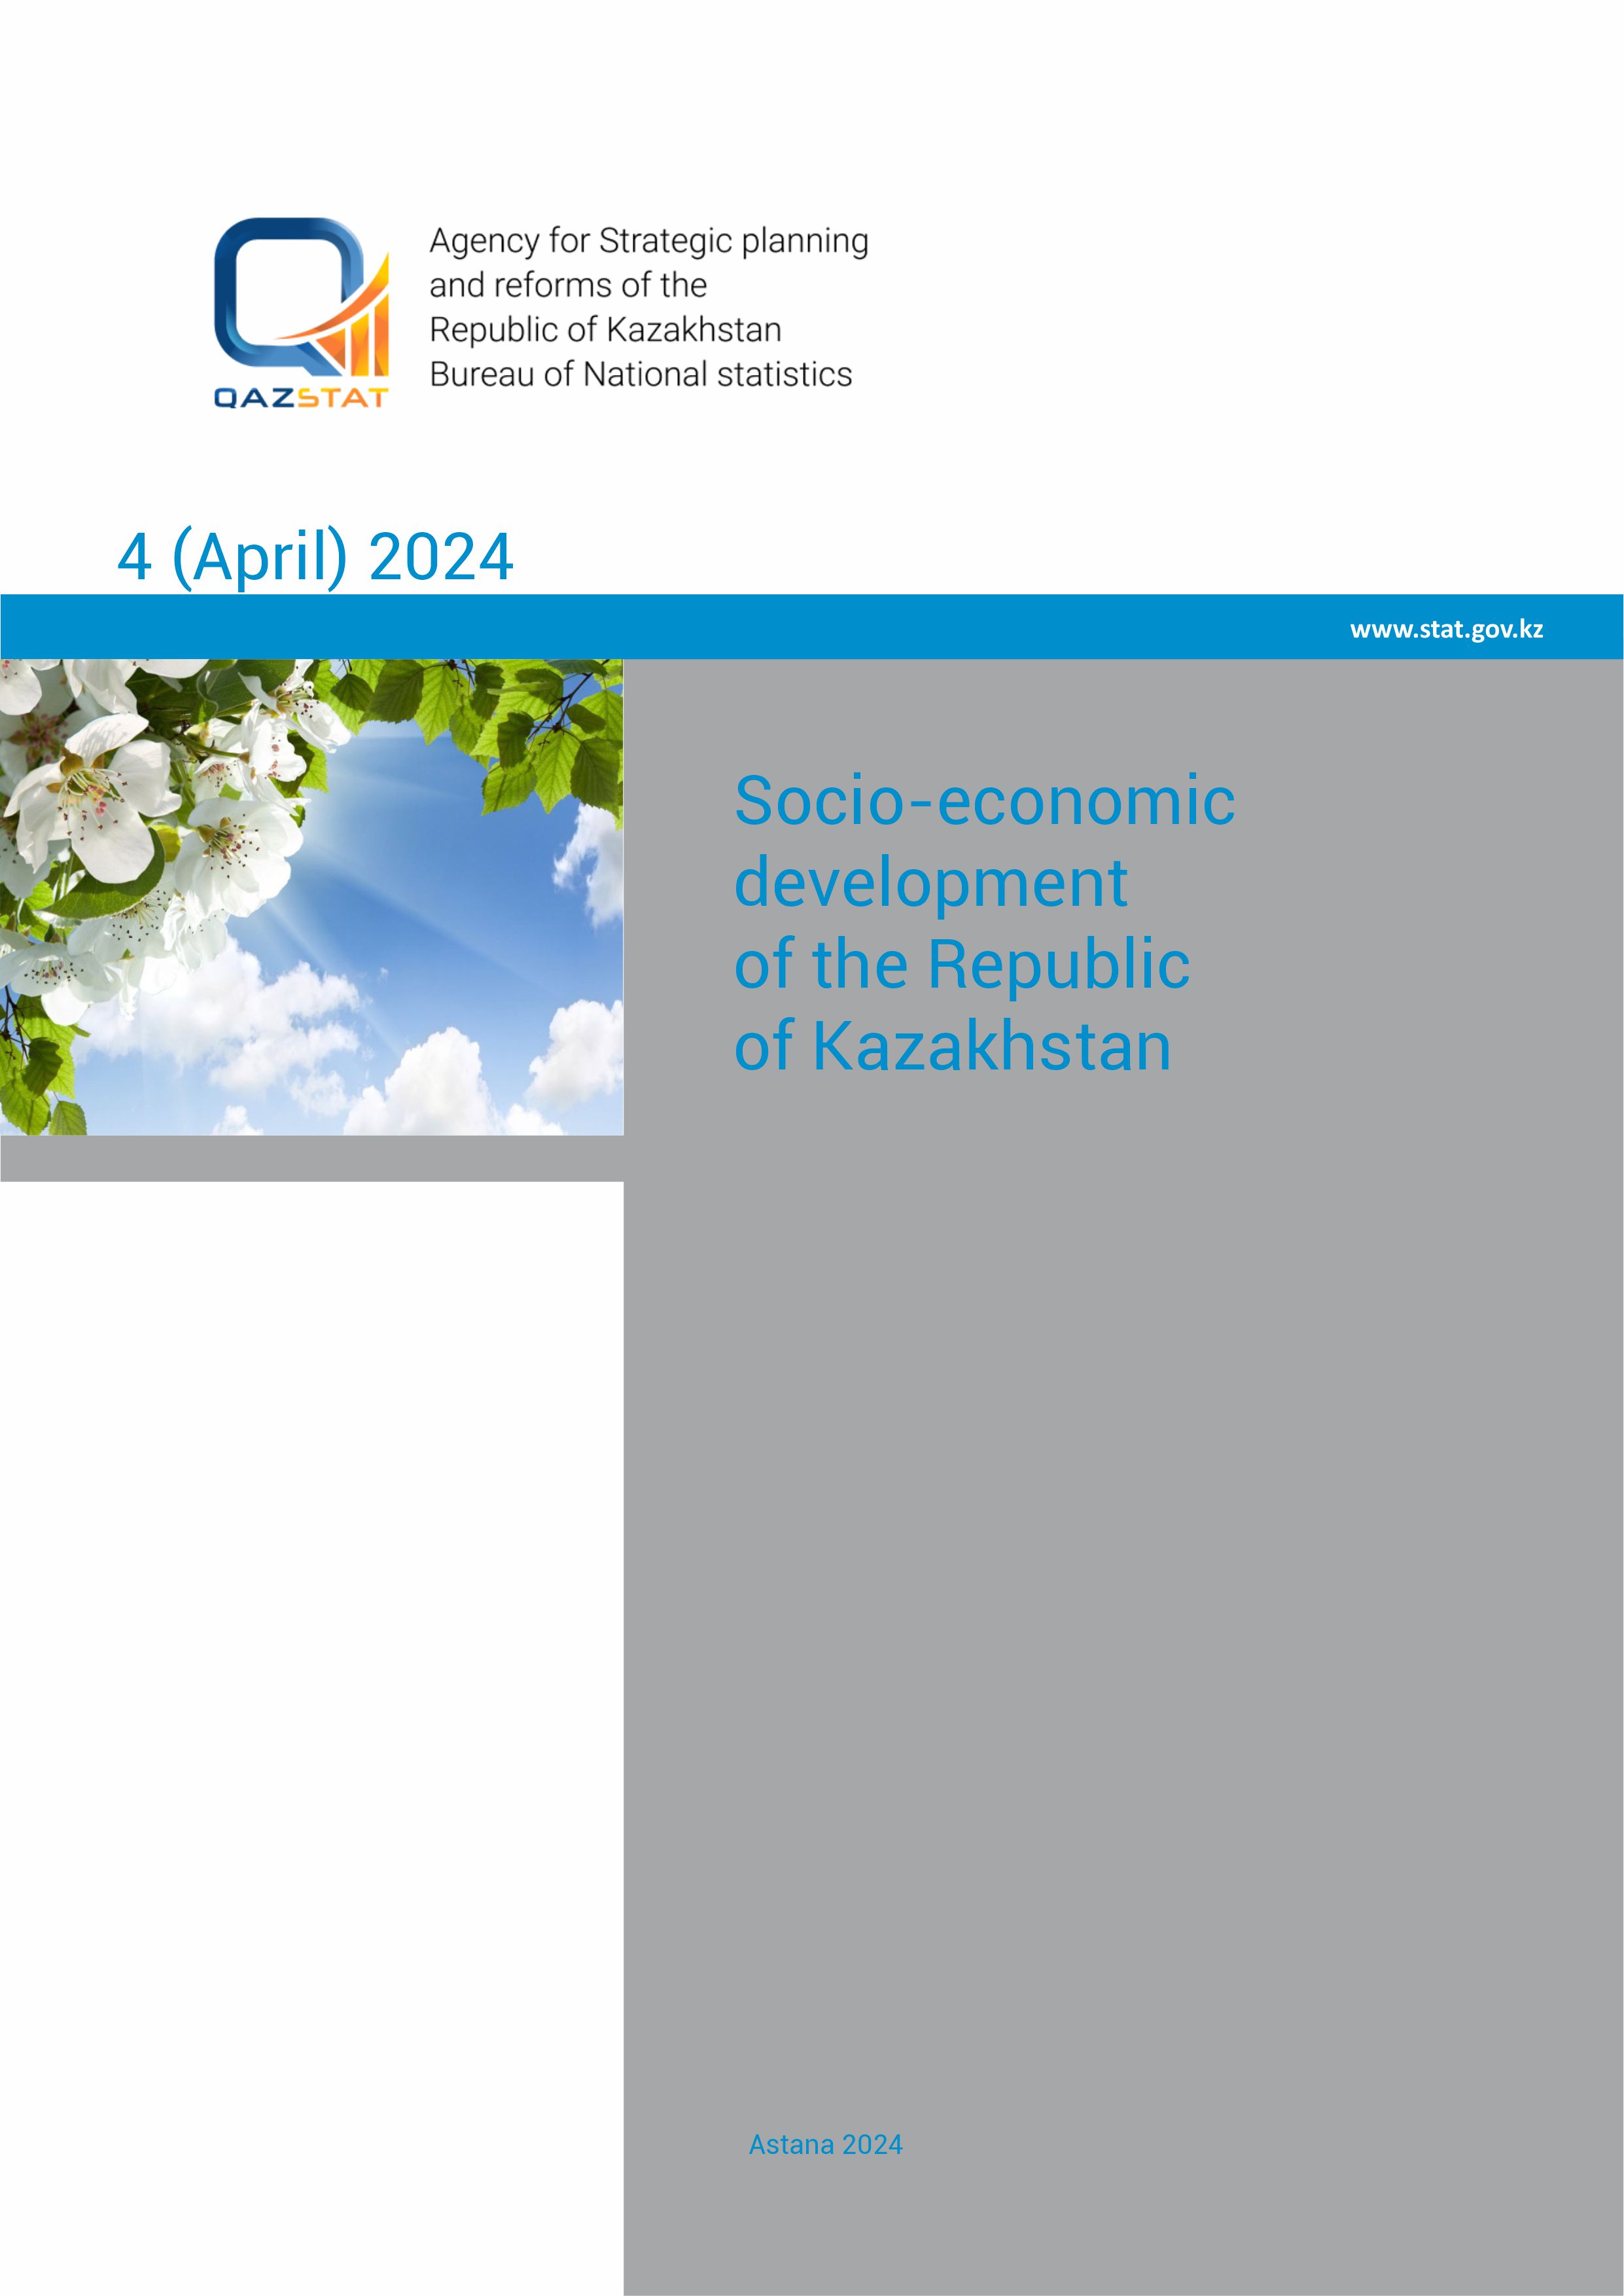 Socio-economic development of the Republic of Kazakhstan